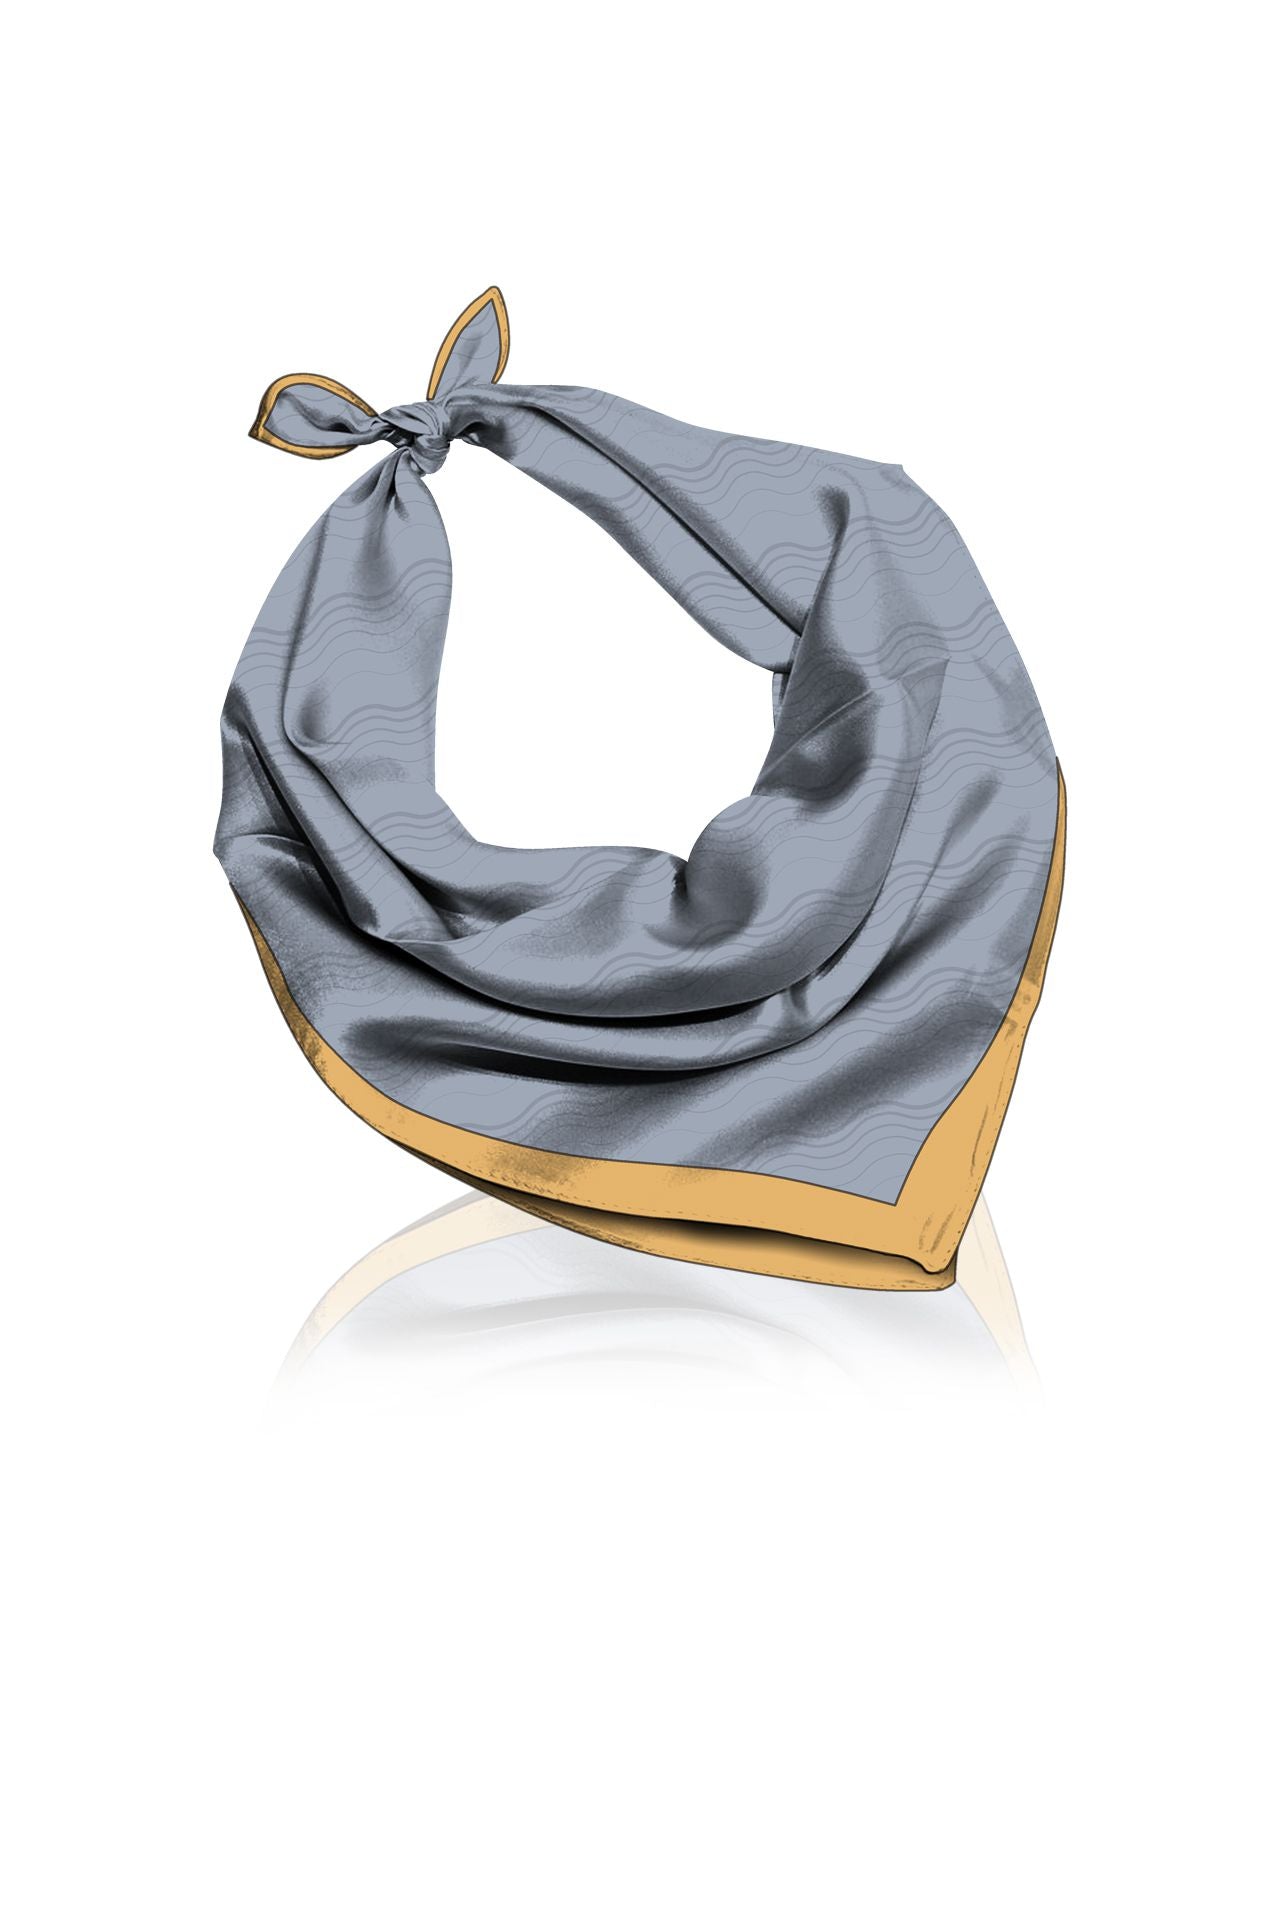 "Kyle X Shahida" "silk head scarves for women" "pure silk scarf" "beautiful silk scarves"